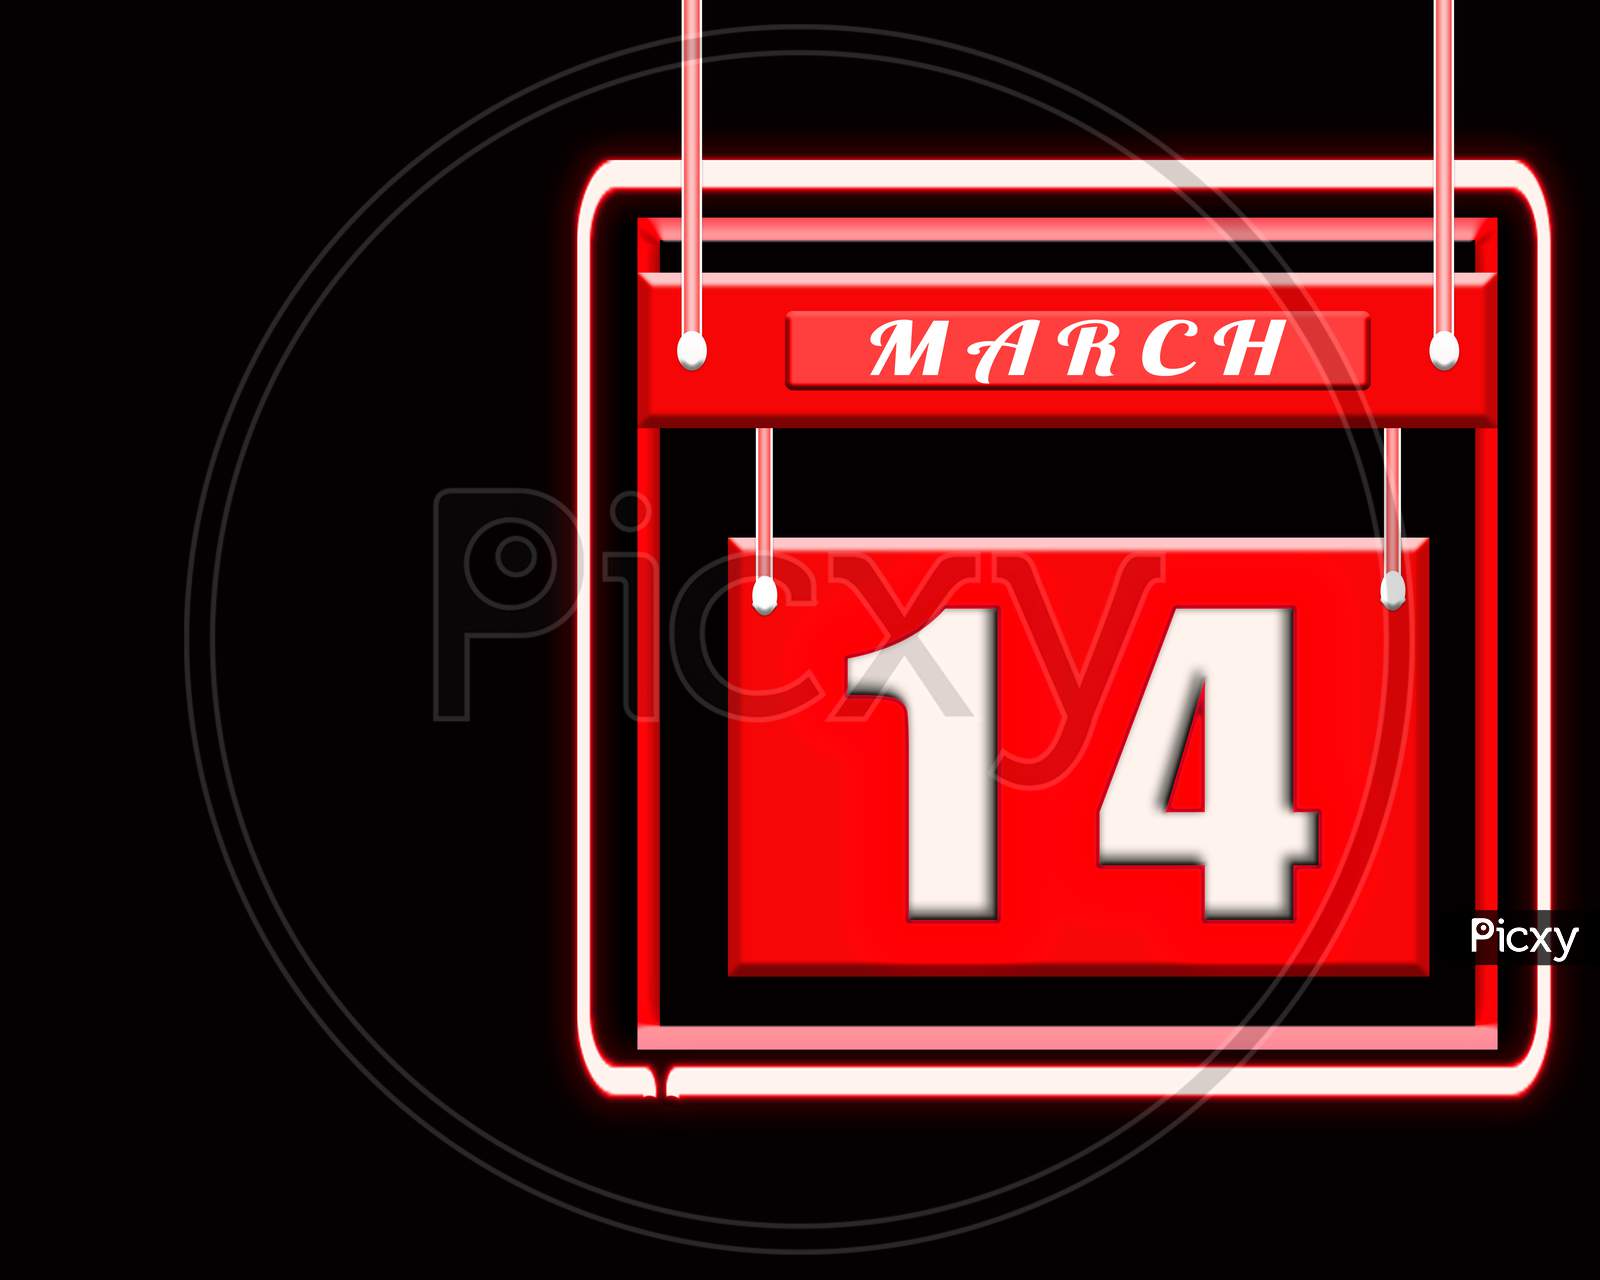 14 March, Red Calendar On Black Backgrand